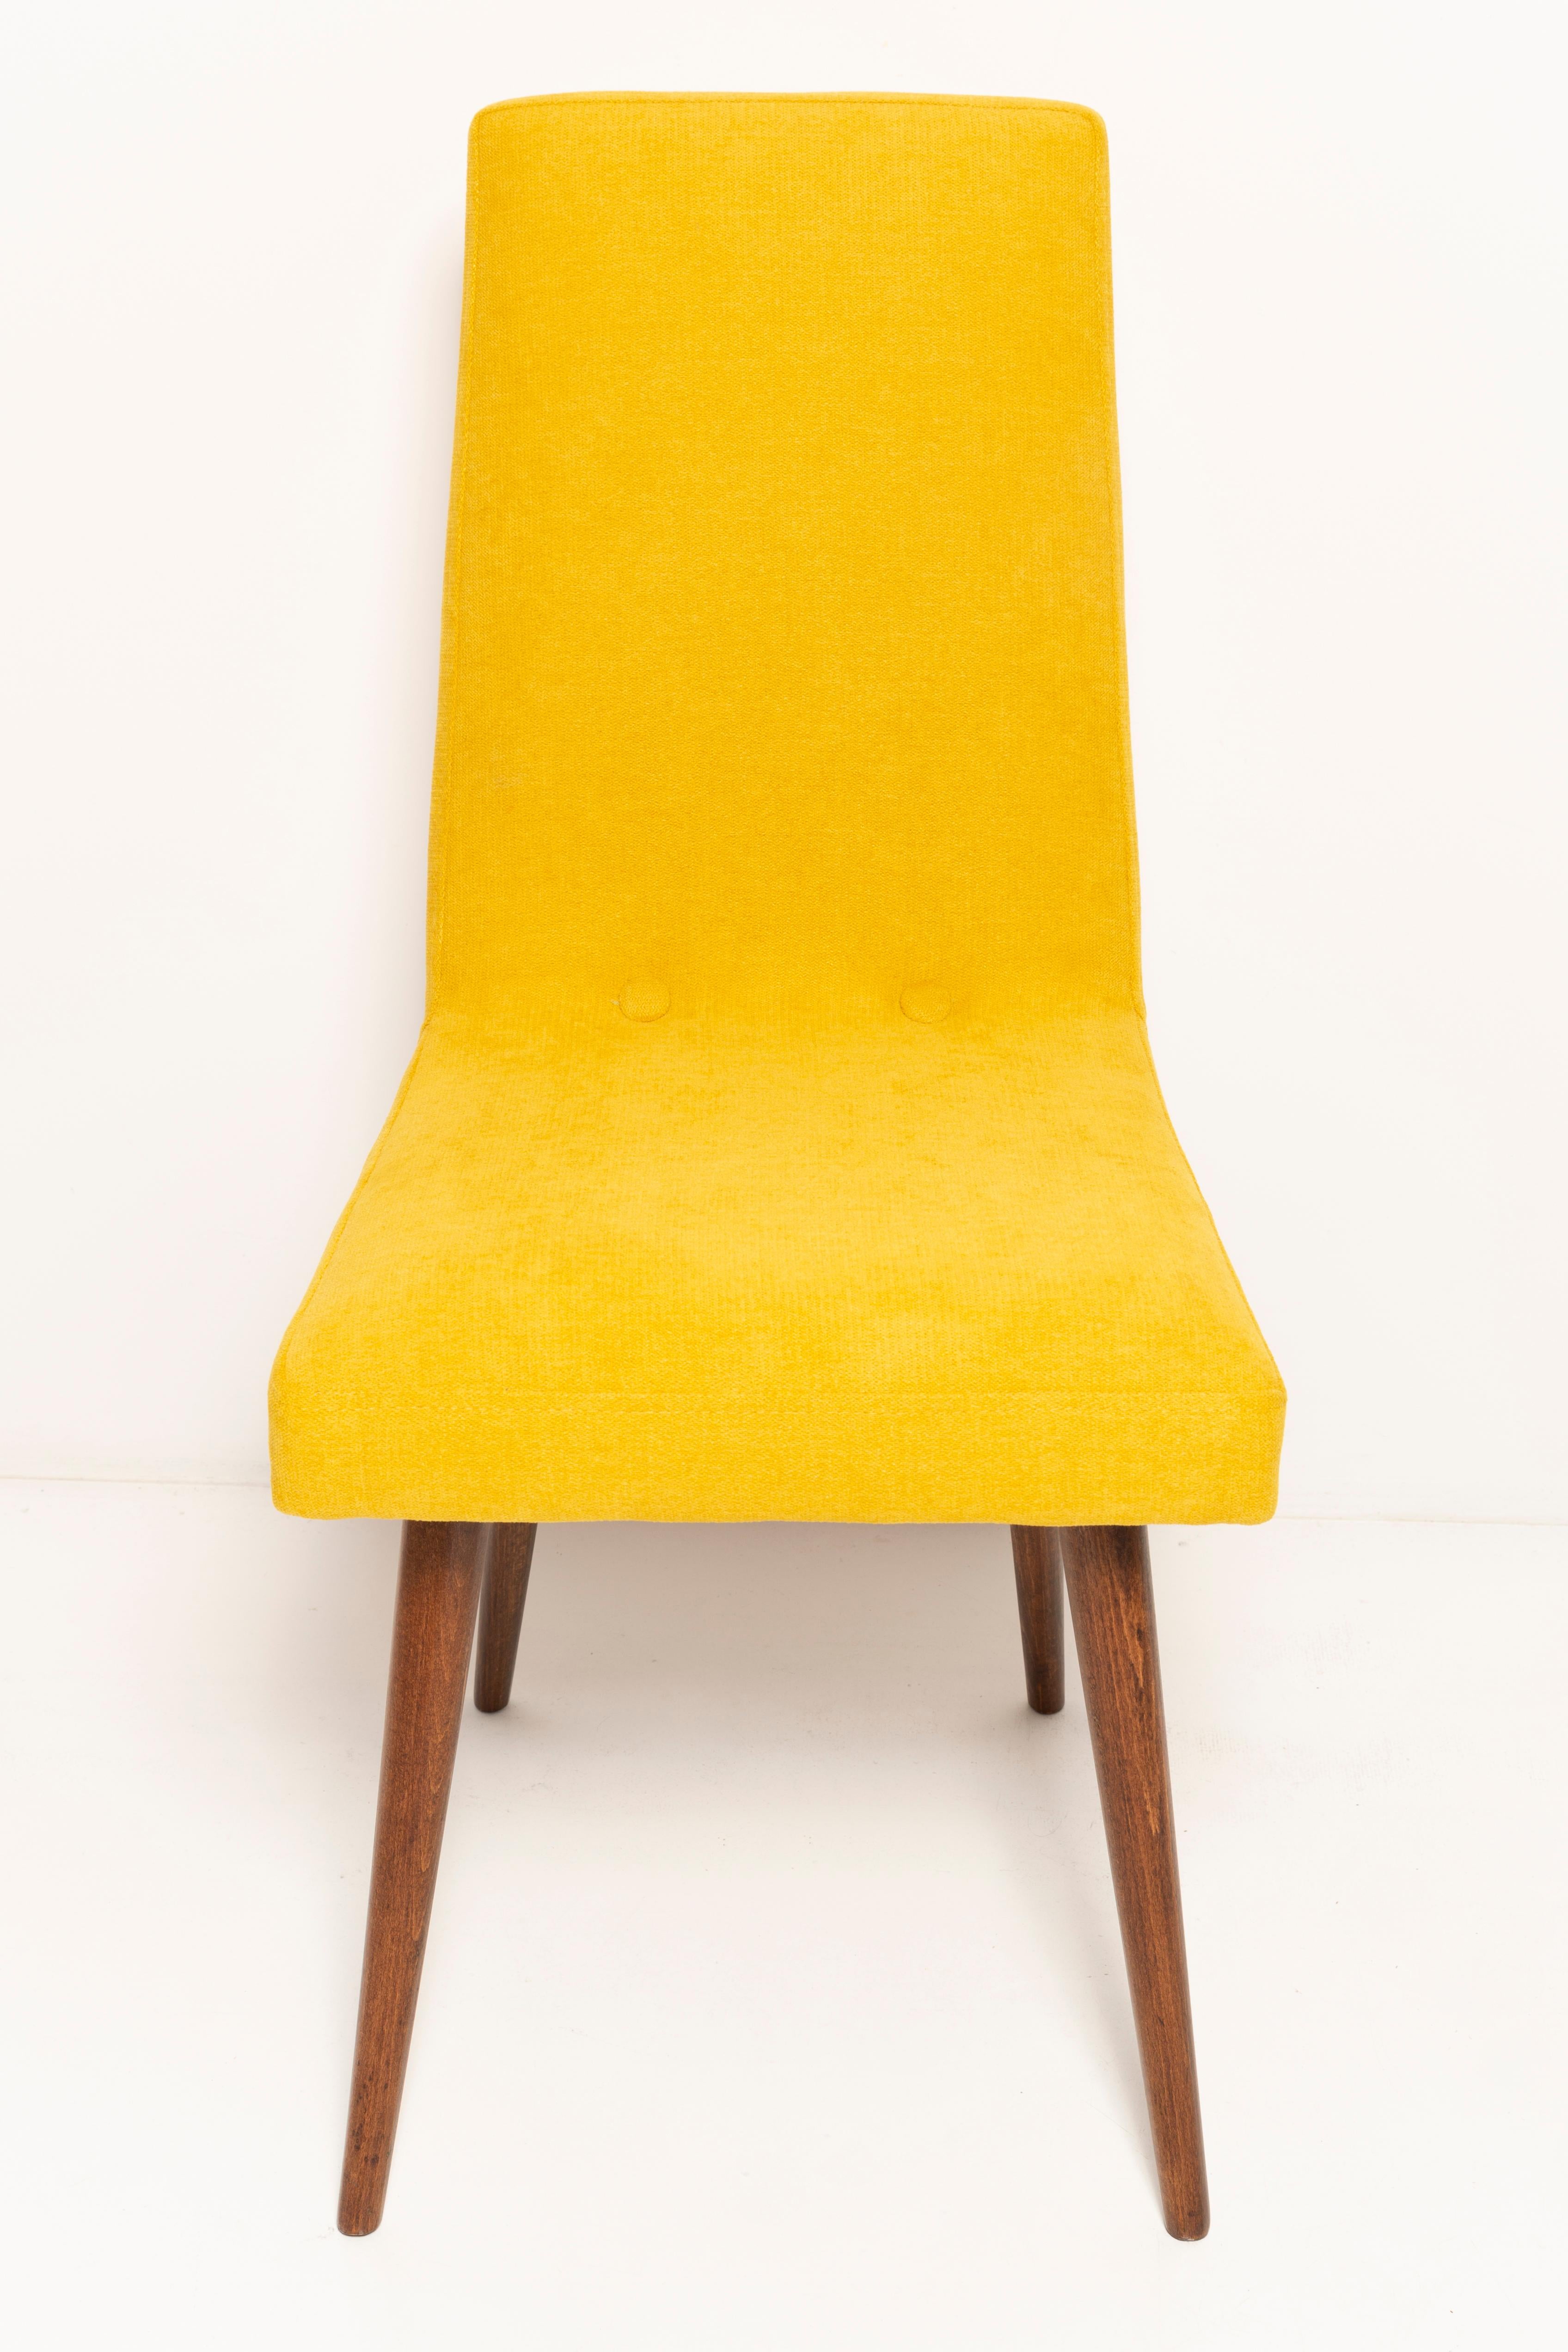 20th Century Mustard Yellow Wool Chair, Rajmund Halas, Europe, 1960s For Sale 3